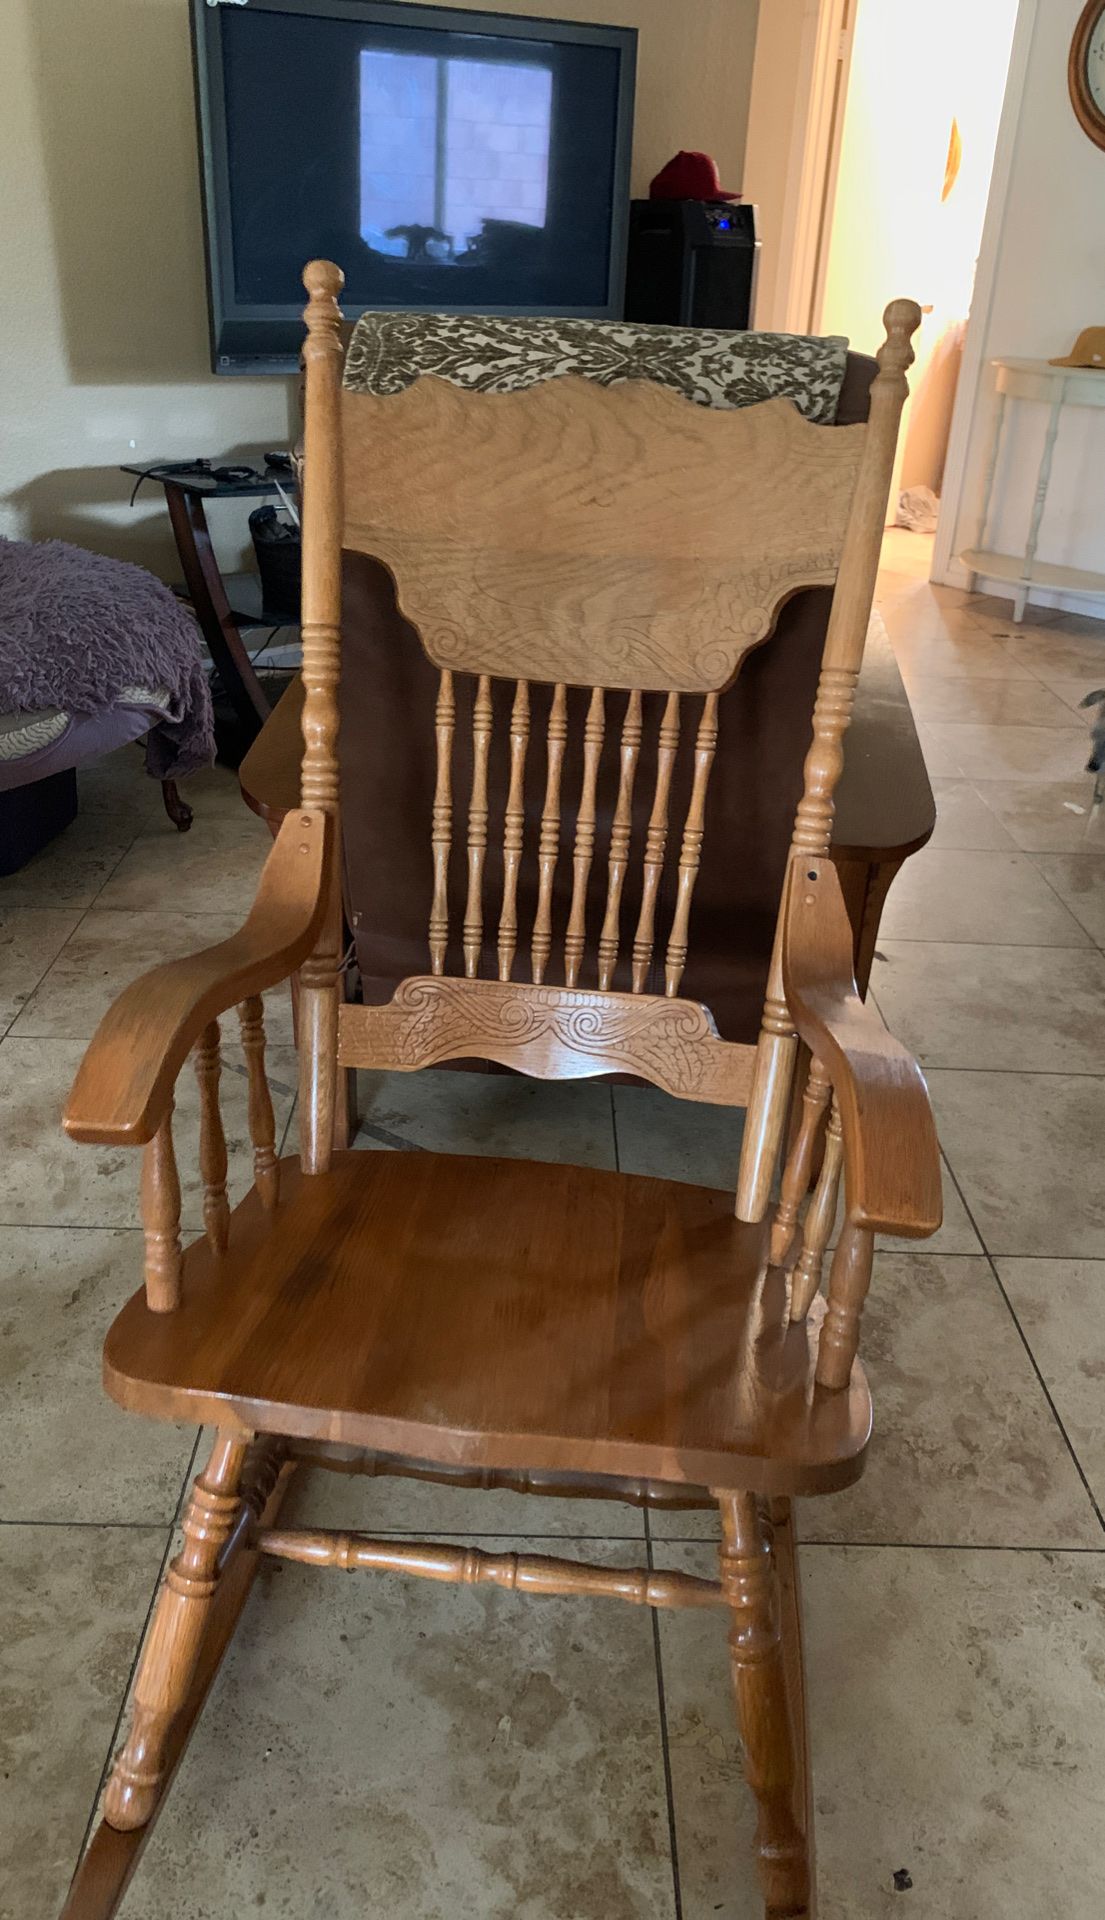 Antique solid oak rocking chair $50.00